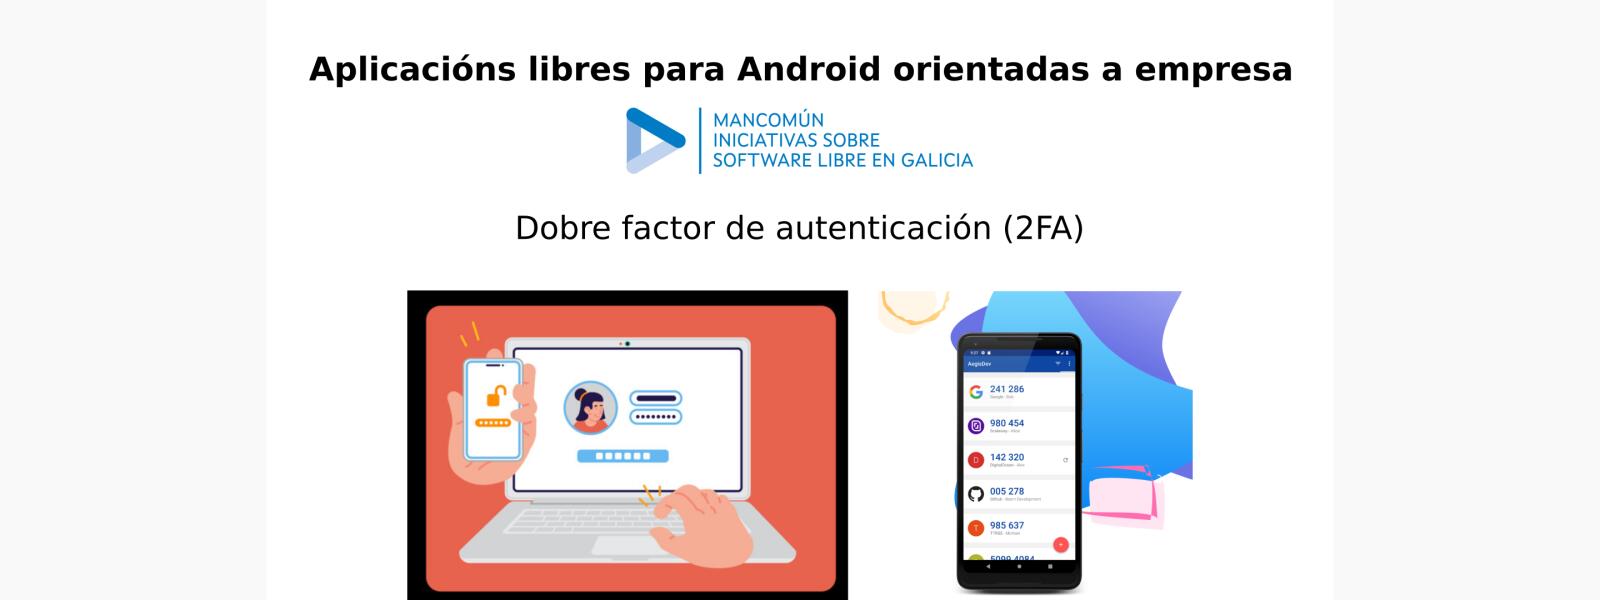 Aplicaciones libres para Android orientadas a empresa: Doble factor de autenticación (2FA)